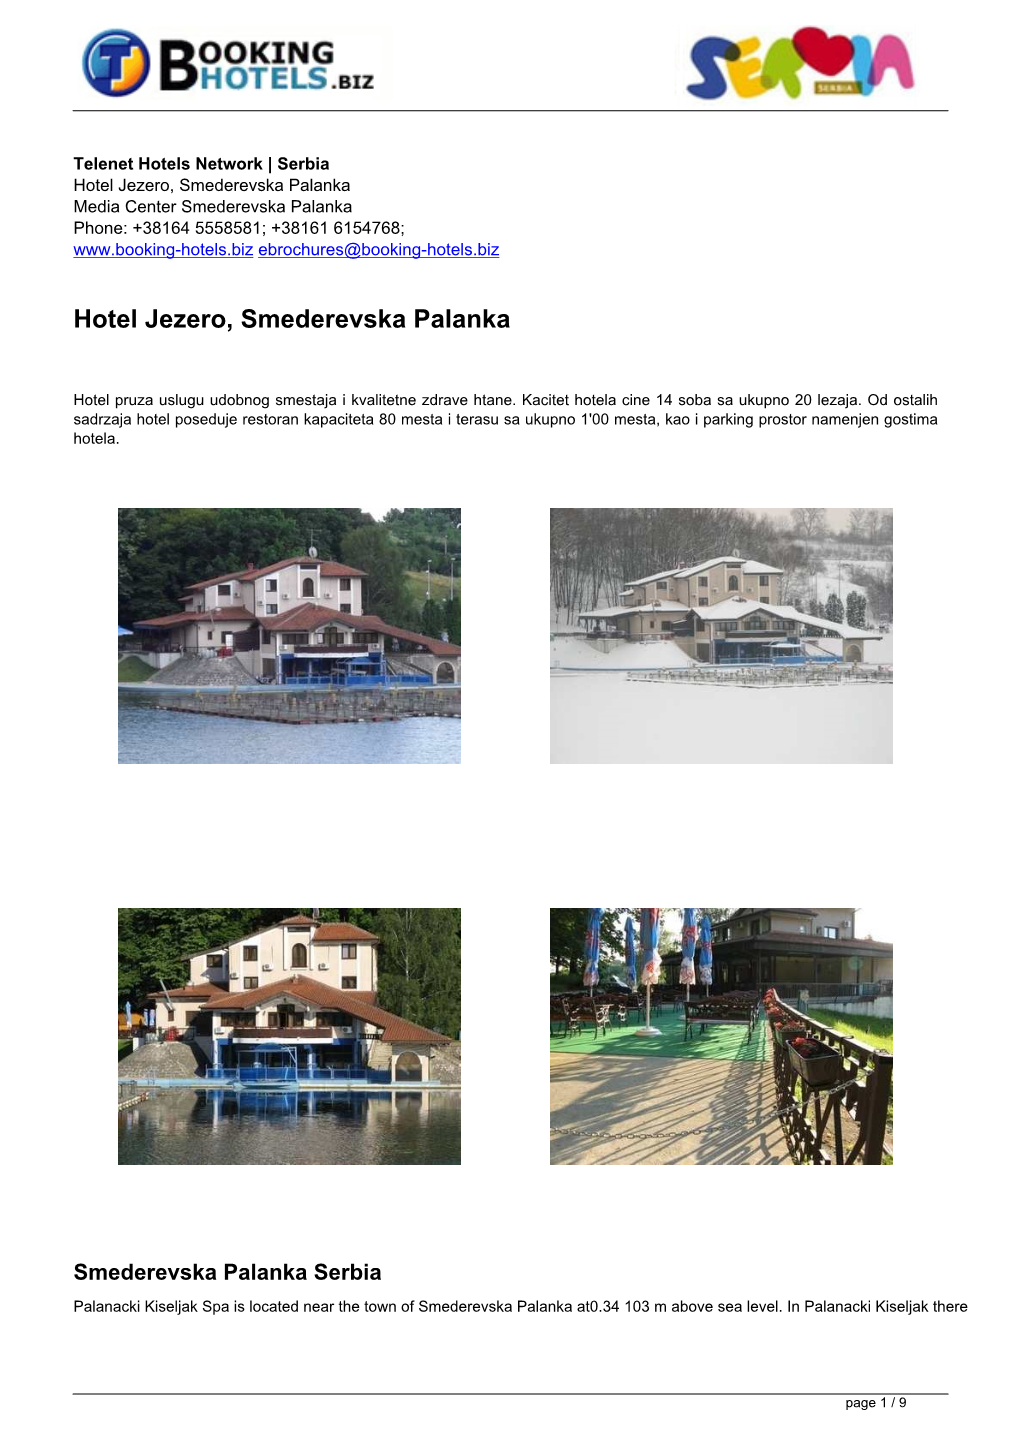 Hotel Jezero, Smederevska Palanka Media Center Smederevska Palanka Phone: +38164 5558581; +38161 6154768; Ebrochures@Booking-Hotels.Biz